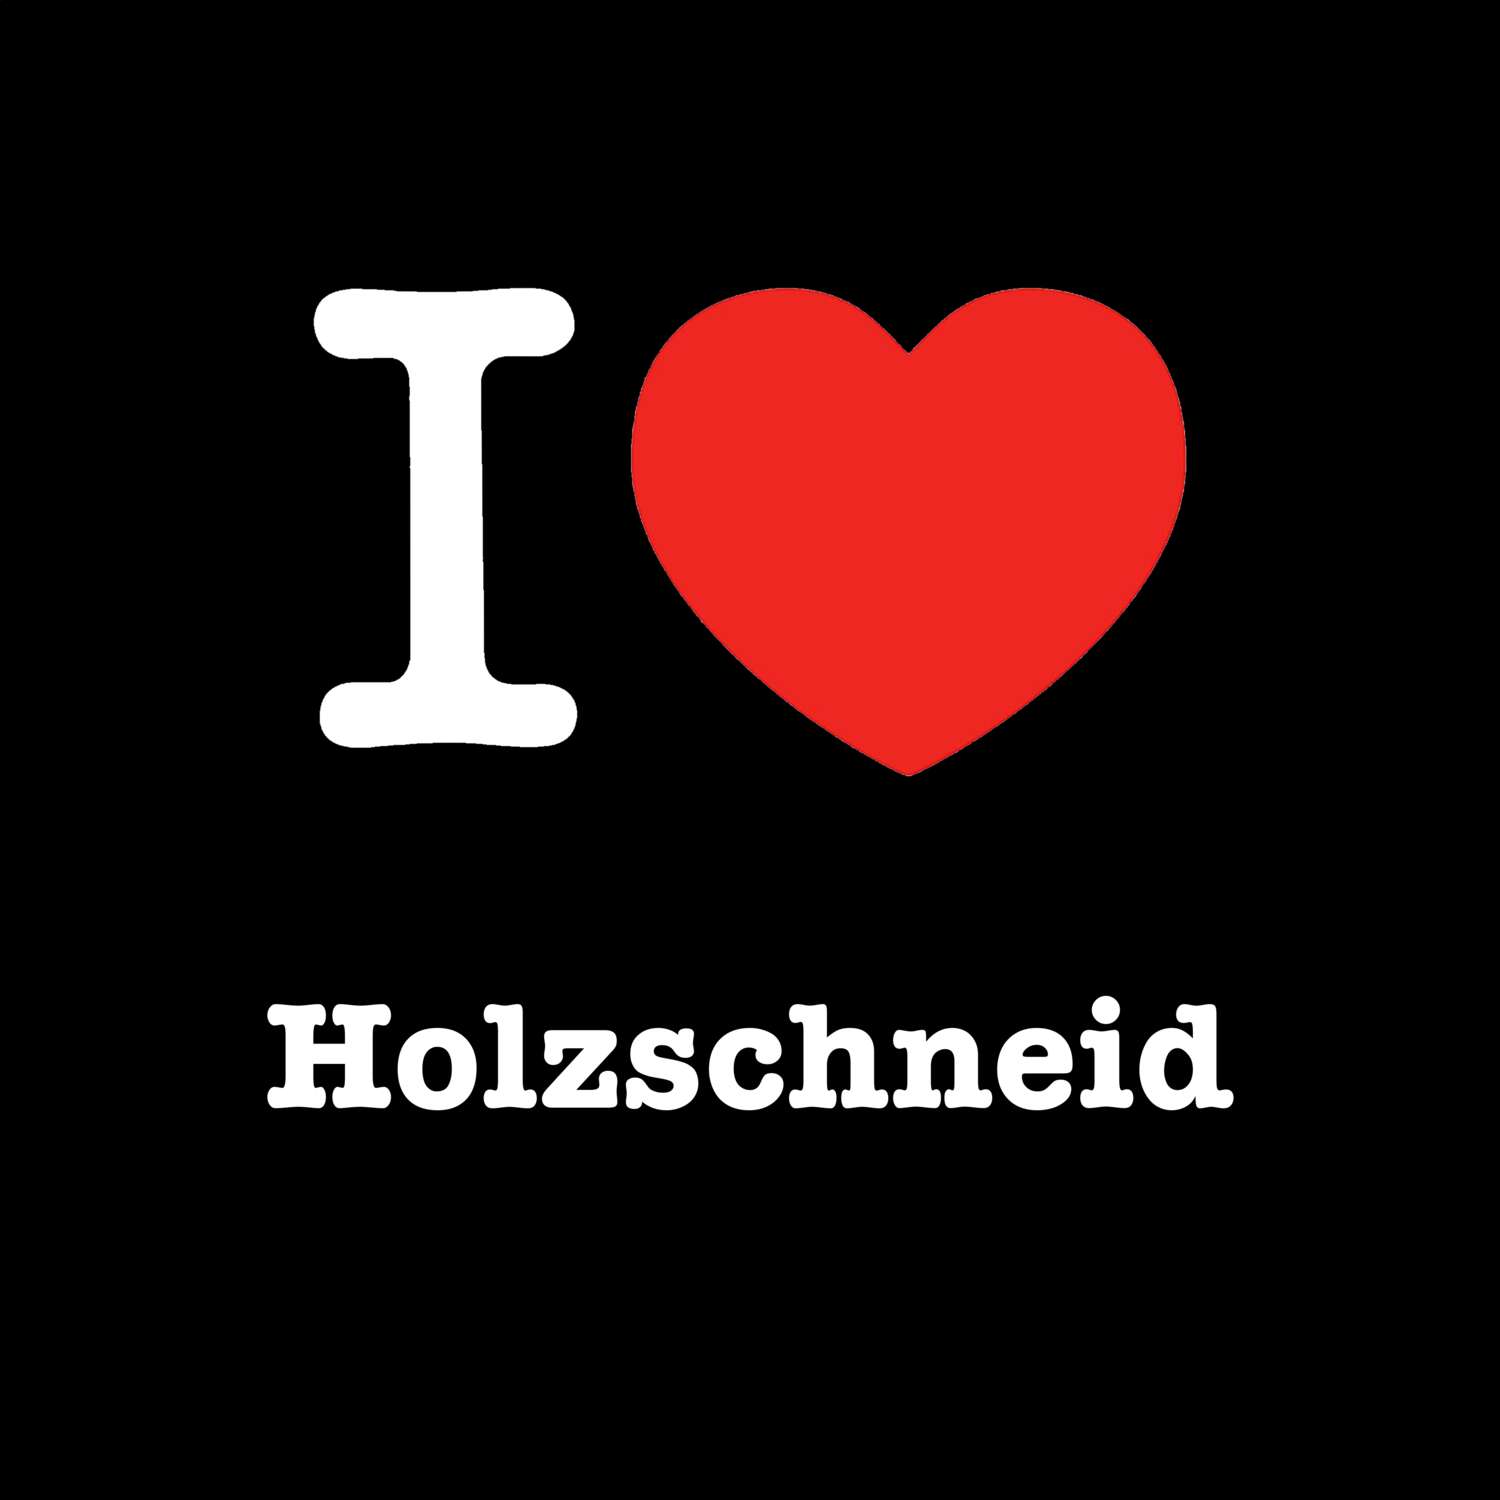 Holzschneid T-Shirt »I love«